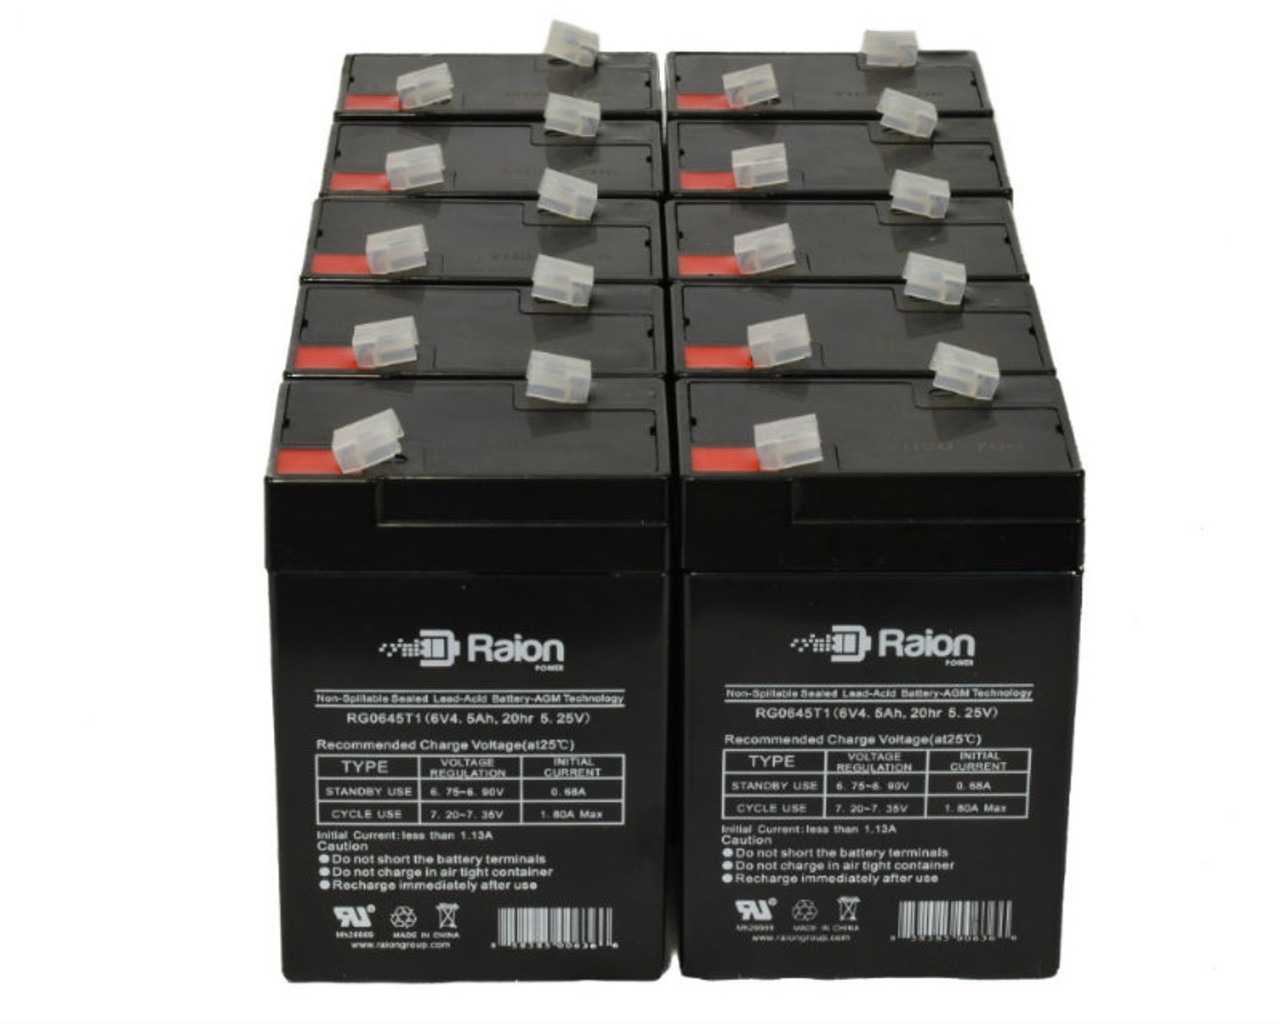 Raion Power 6V 4.5Ah Replacement Emergency Light Battery for Emergi-Lite M1 - 10 Pack